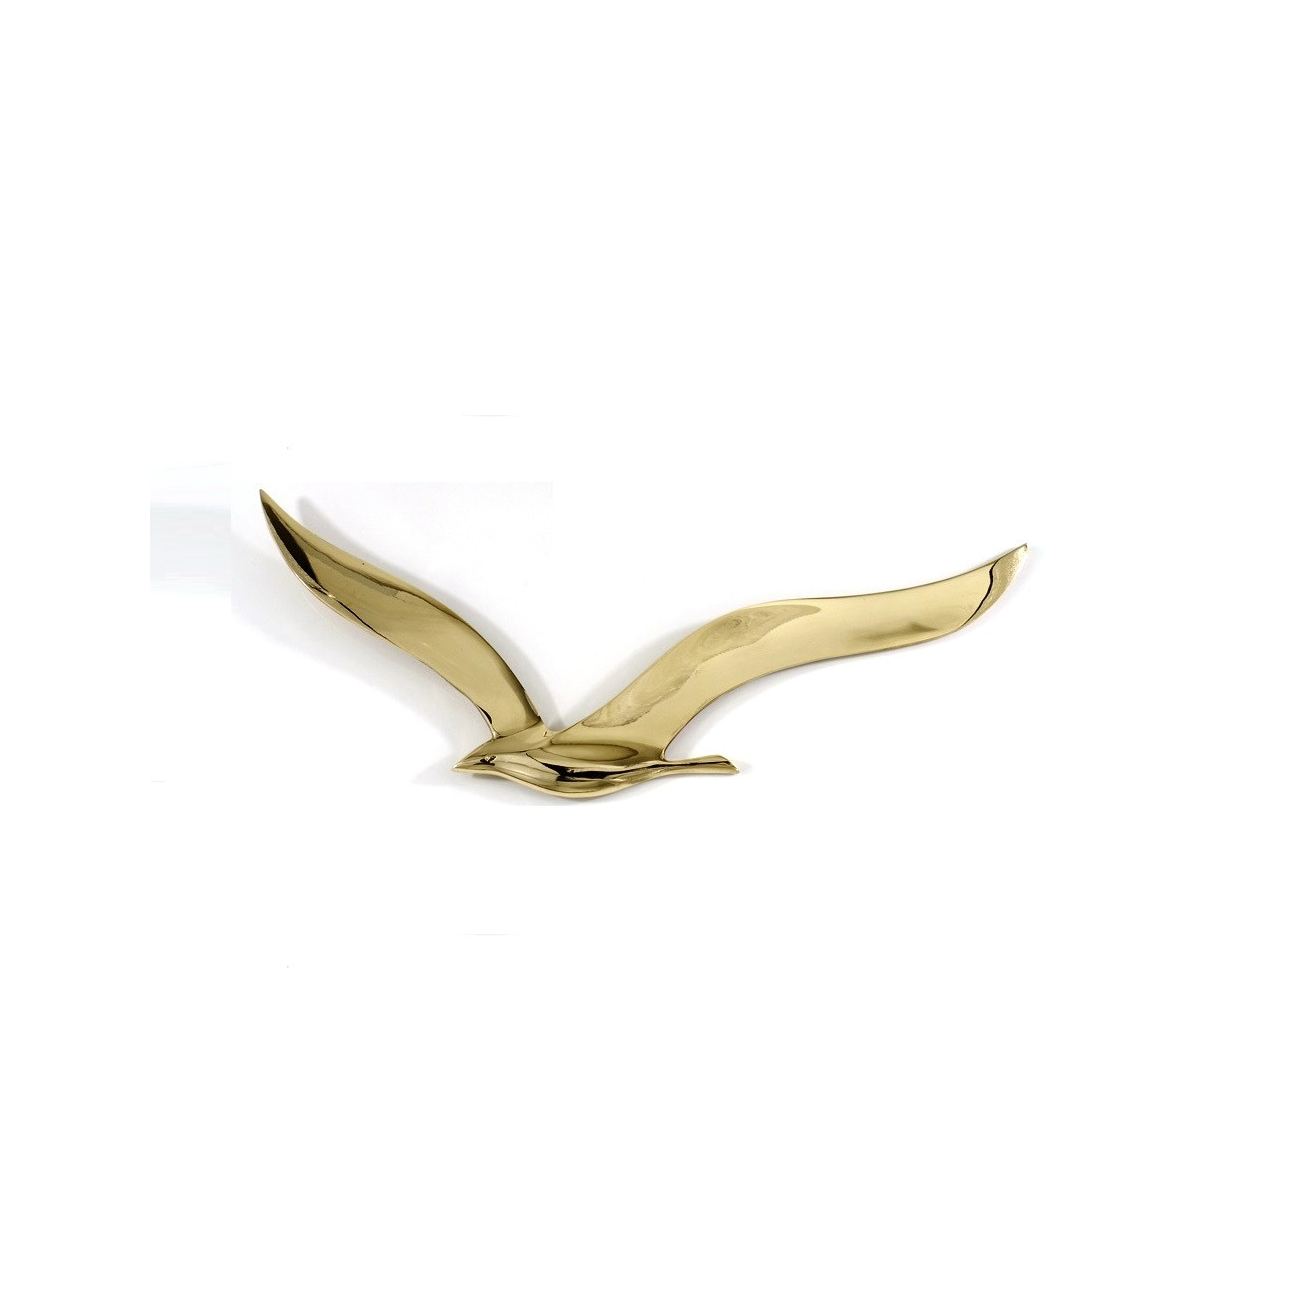 Handmade Metal Wall Art Sculpture Gold Color Flying Pair of Seagulls 